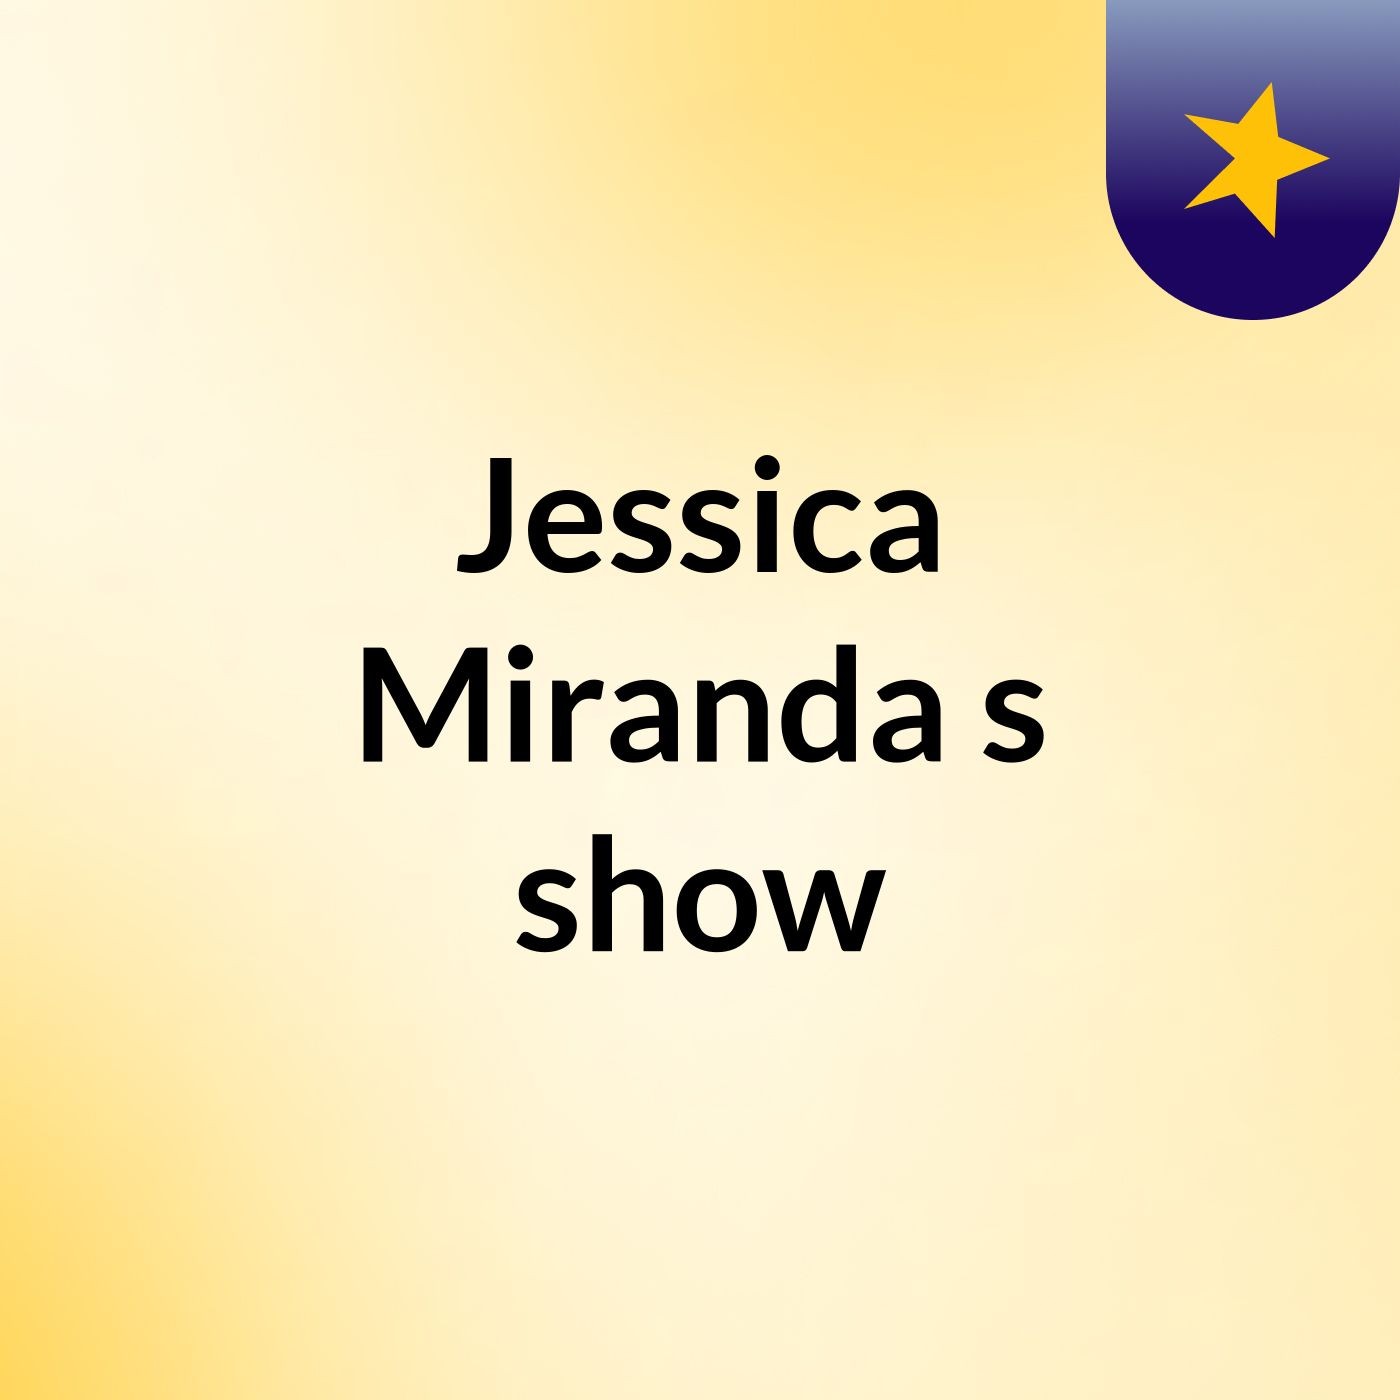 Jessica Miranda's show